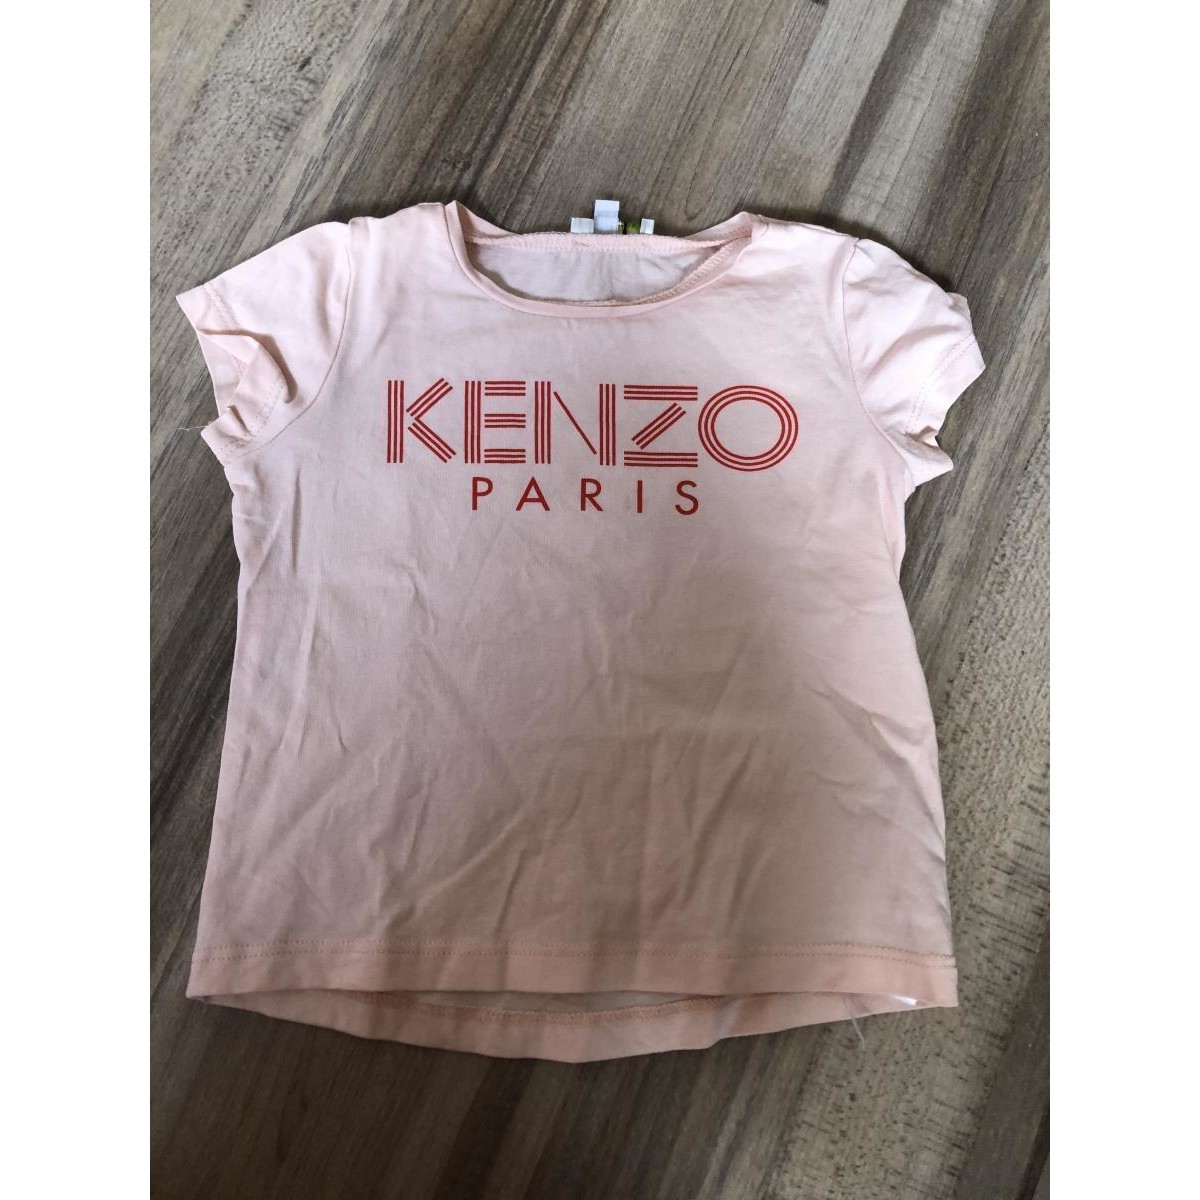 Vêheat-print Fille T-shirts manches courtes Kenzo Tee shirt kenzo Rose